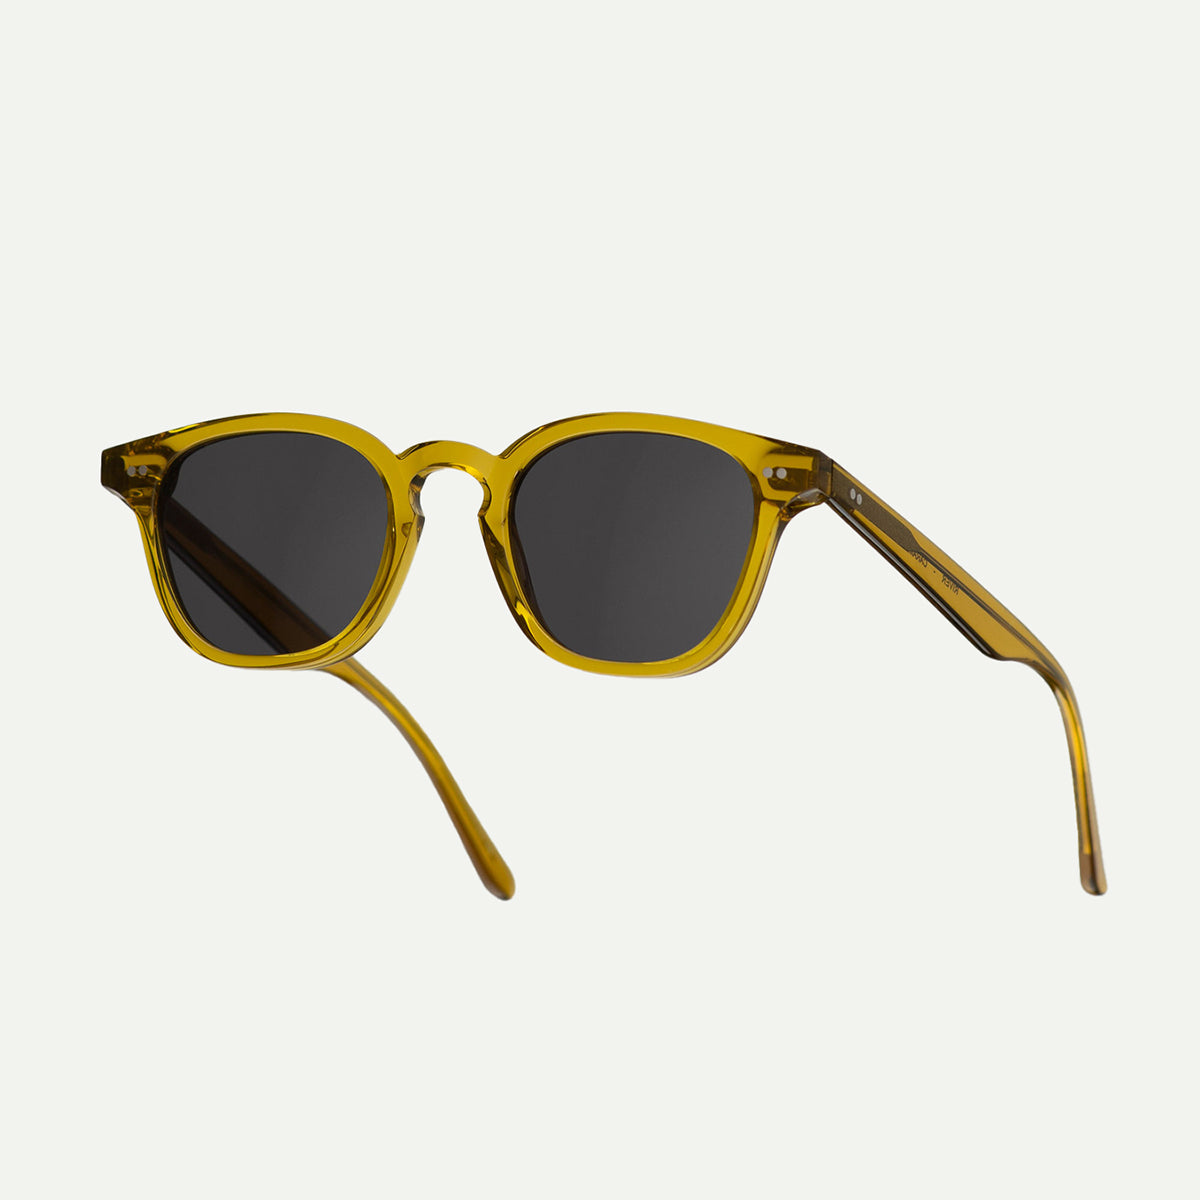 Monokel Eyewear River Caramel Sunglasses